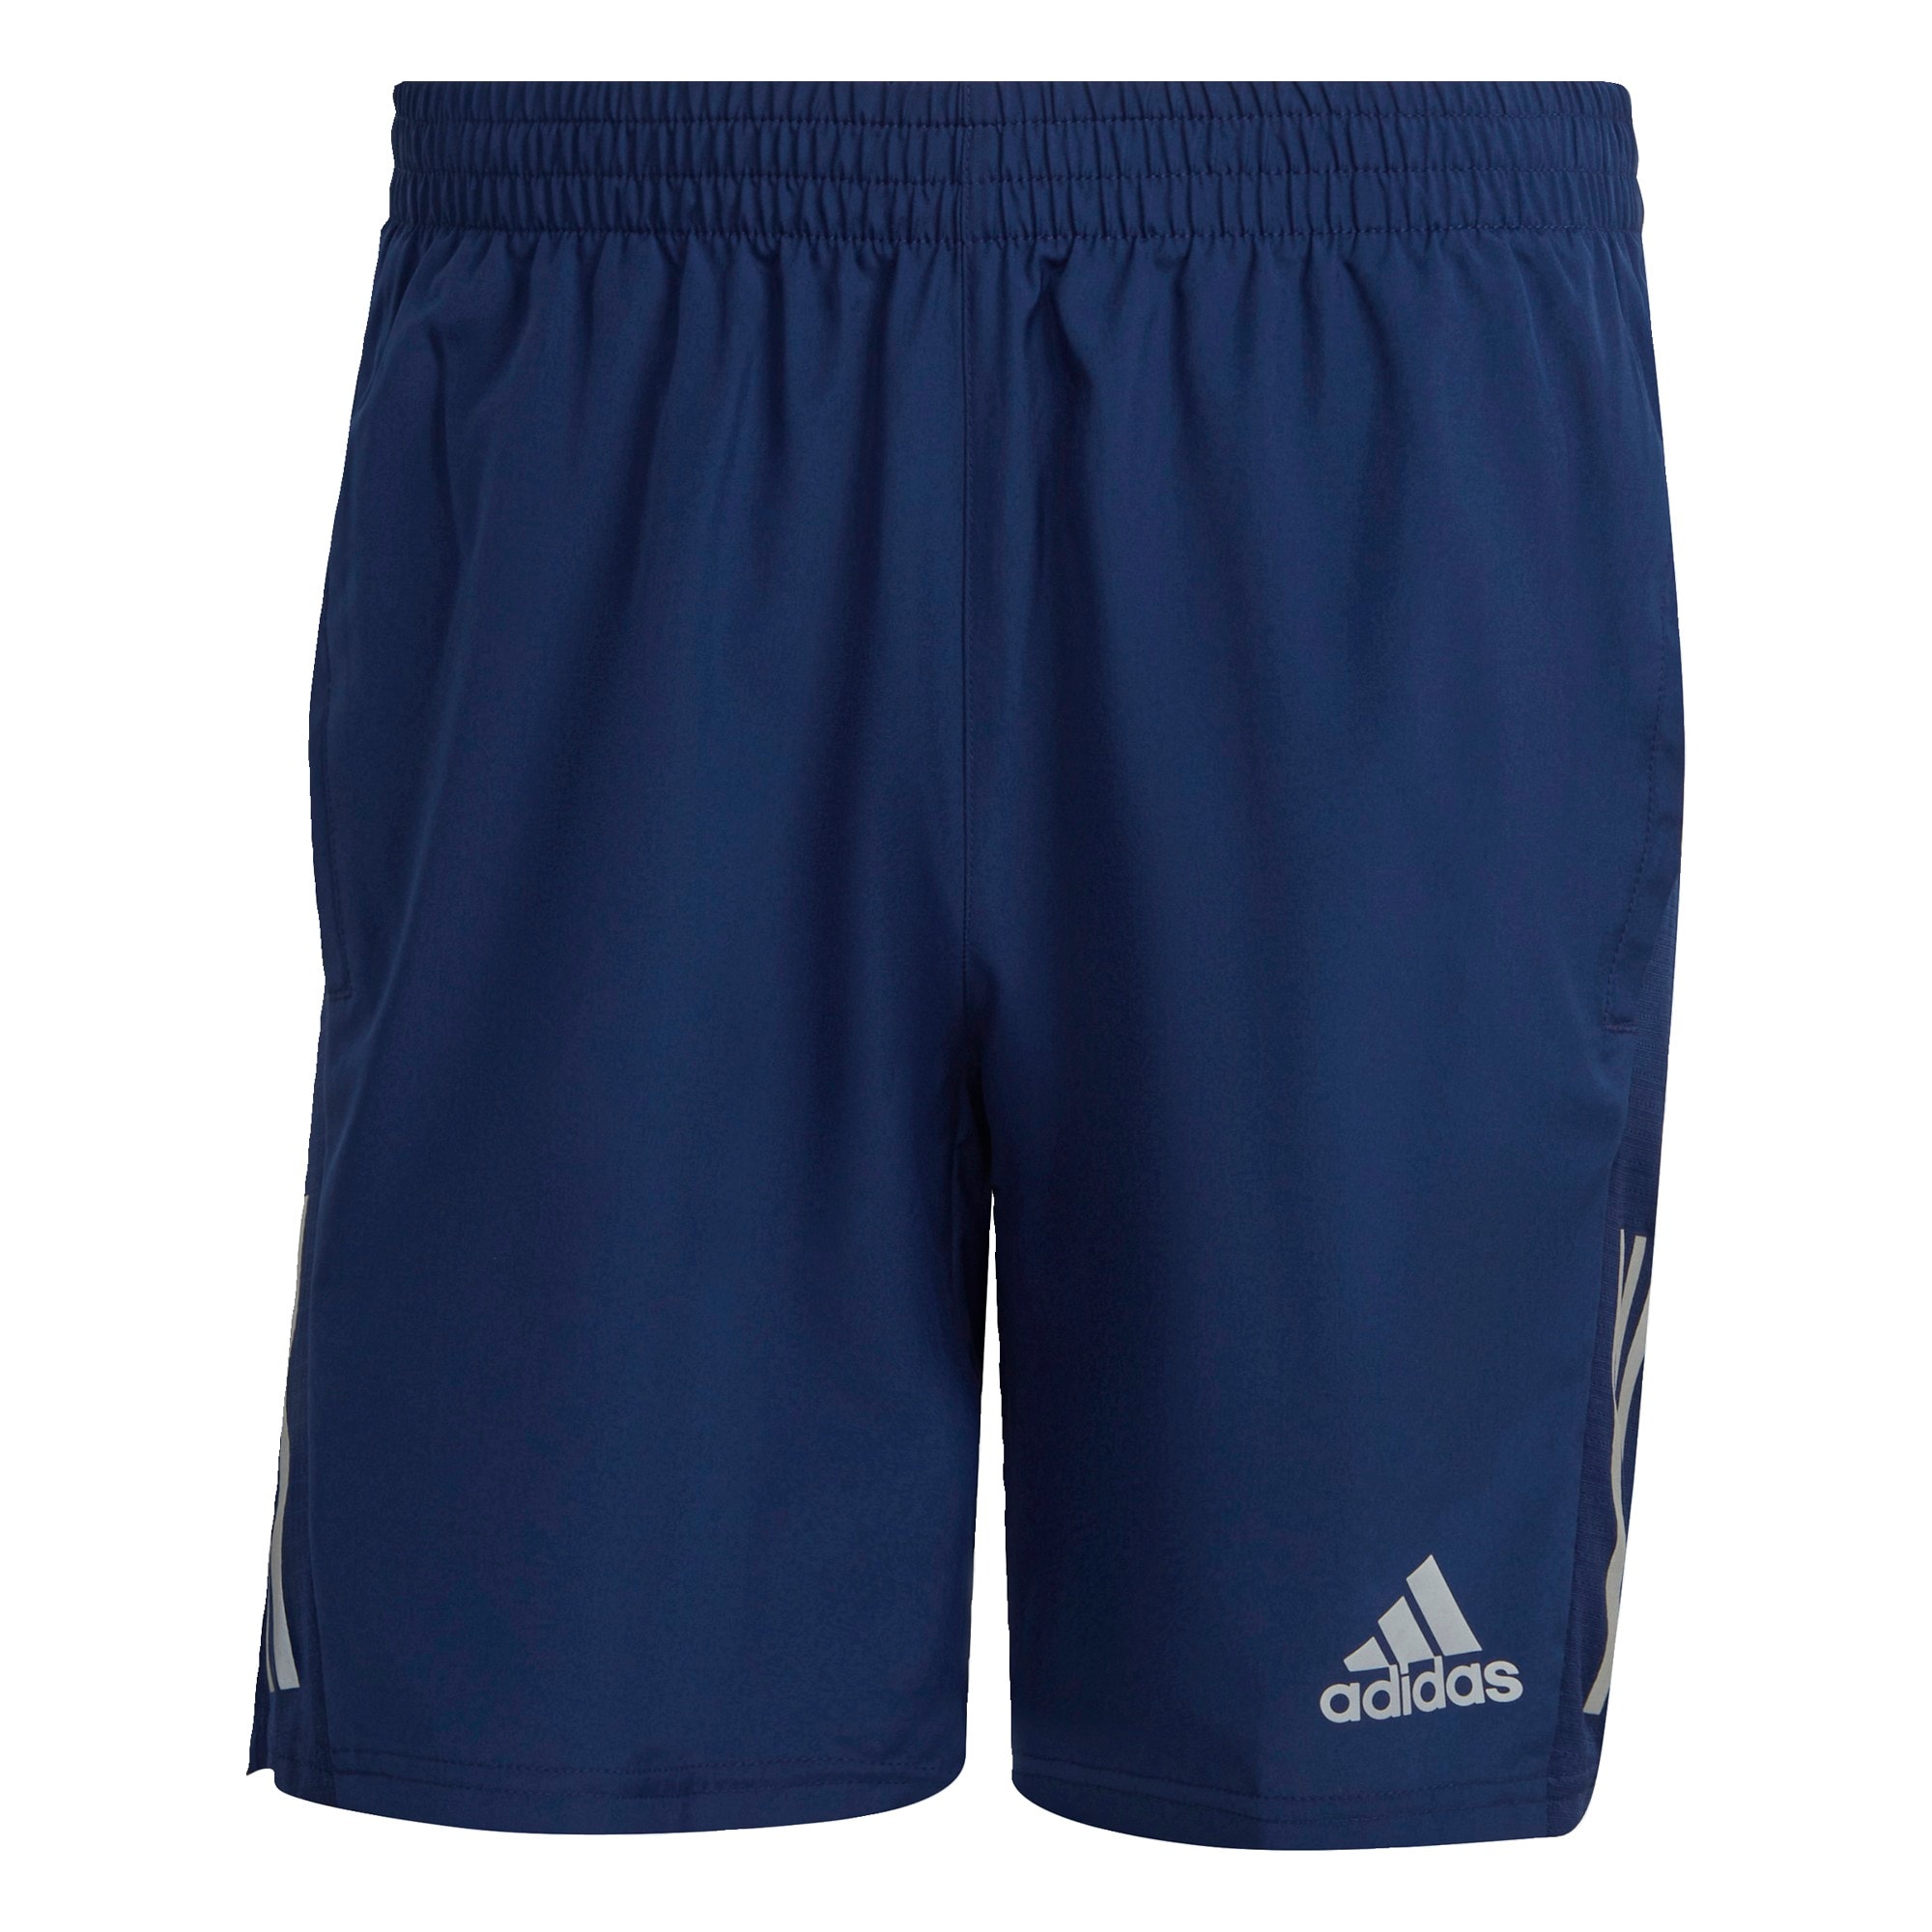 ADIDAS PERFORMANCE Športne hlače 'Own the Run'  temno modra / srebrna